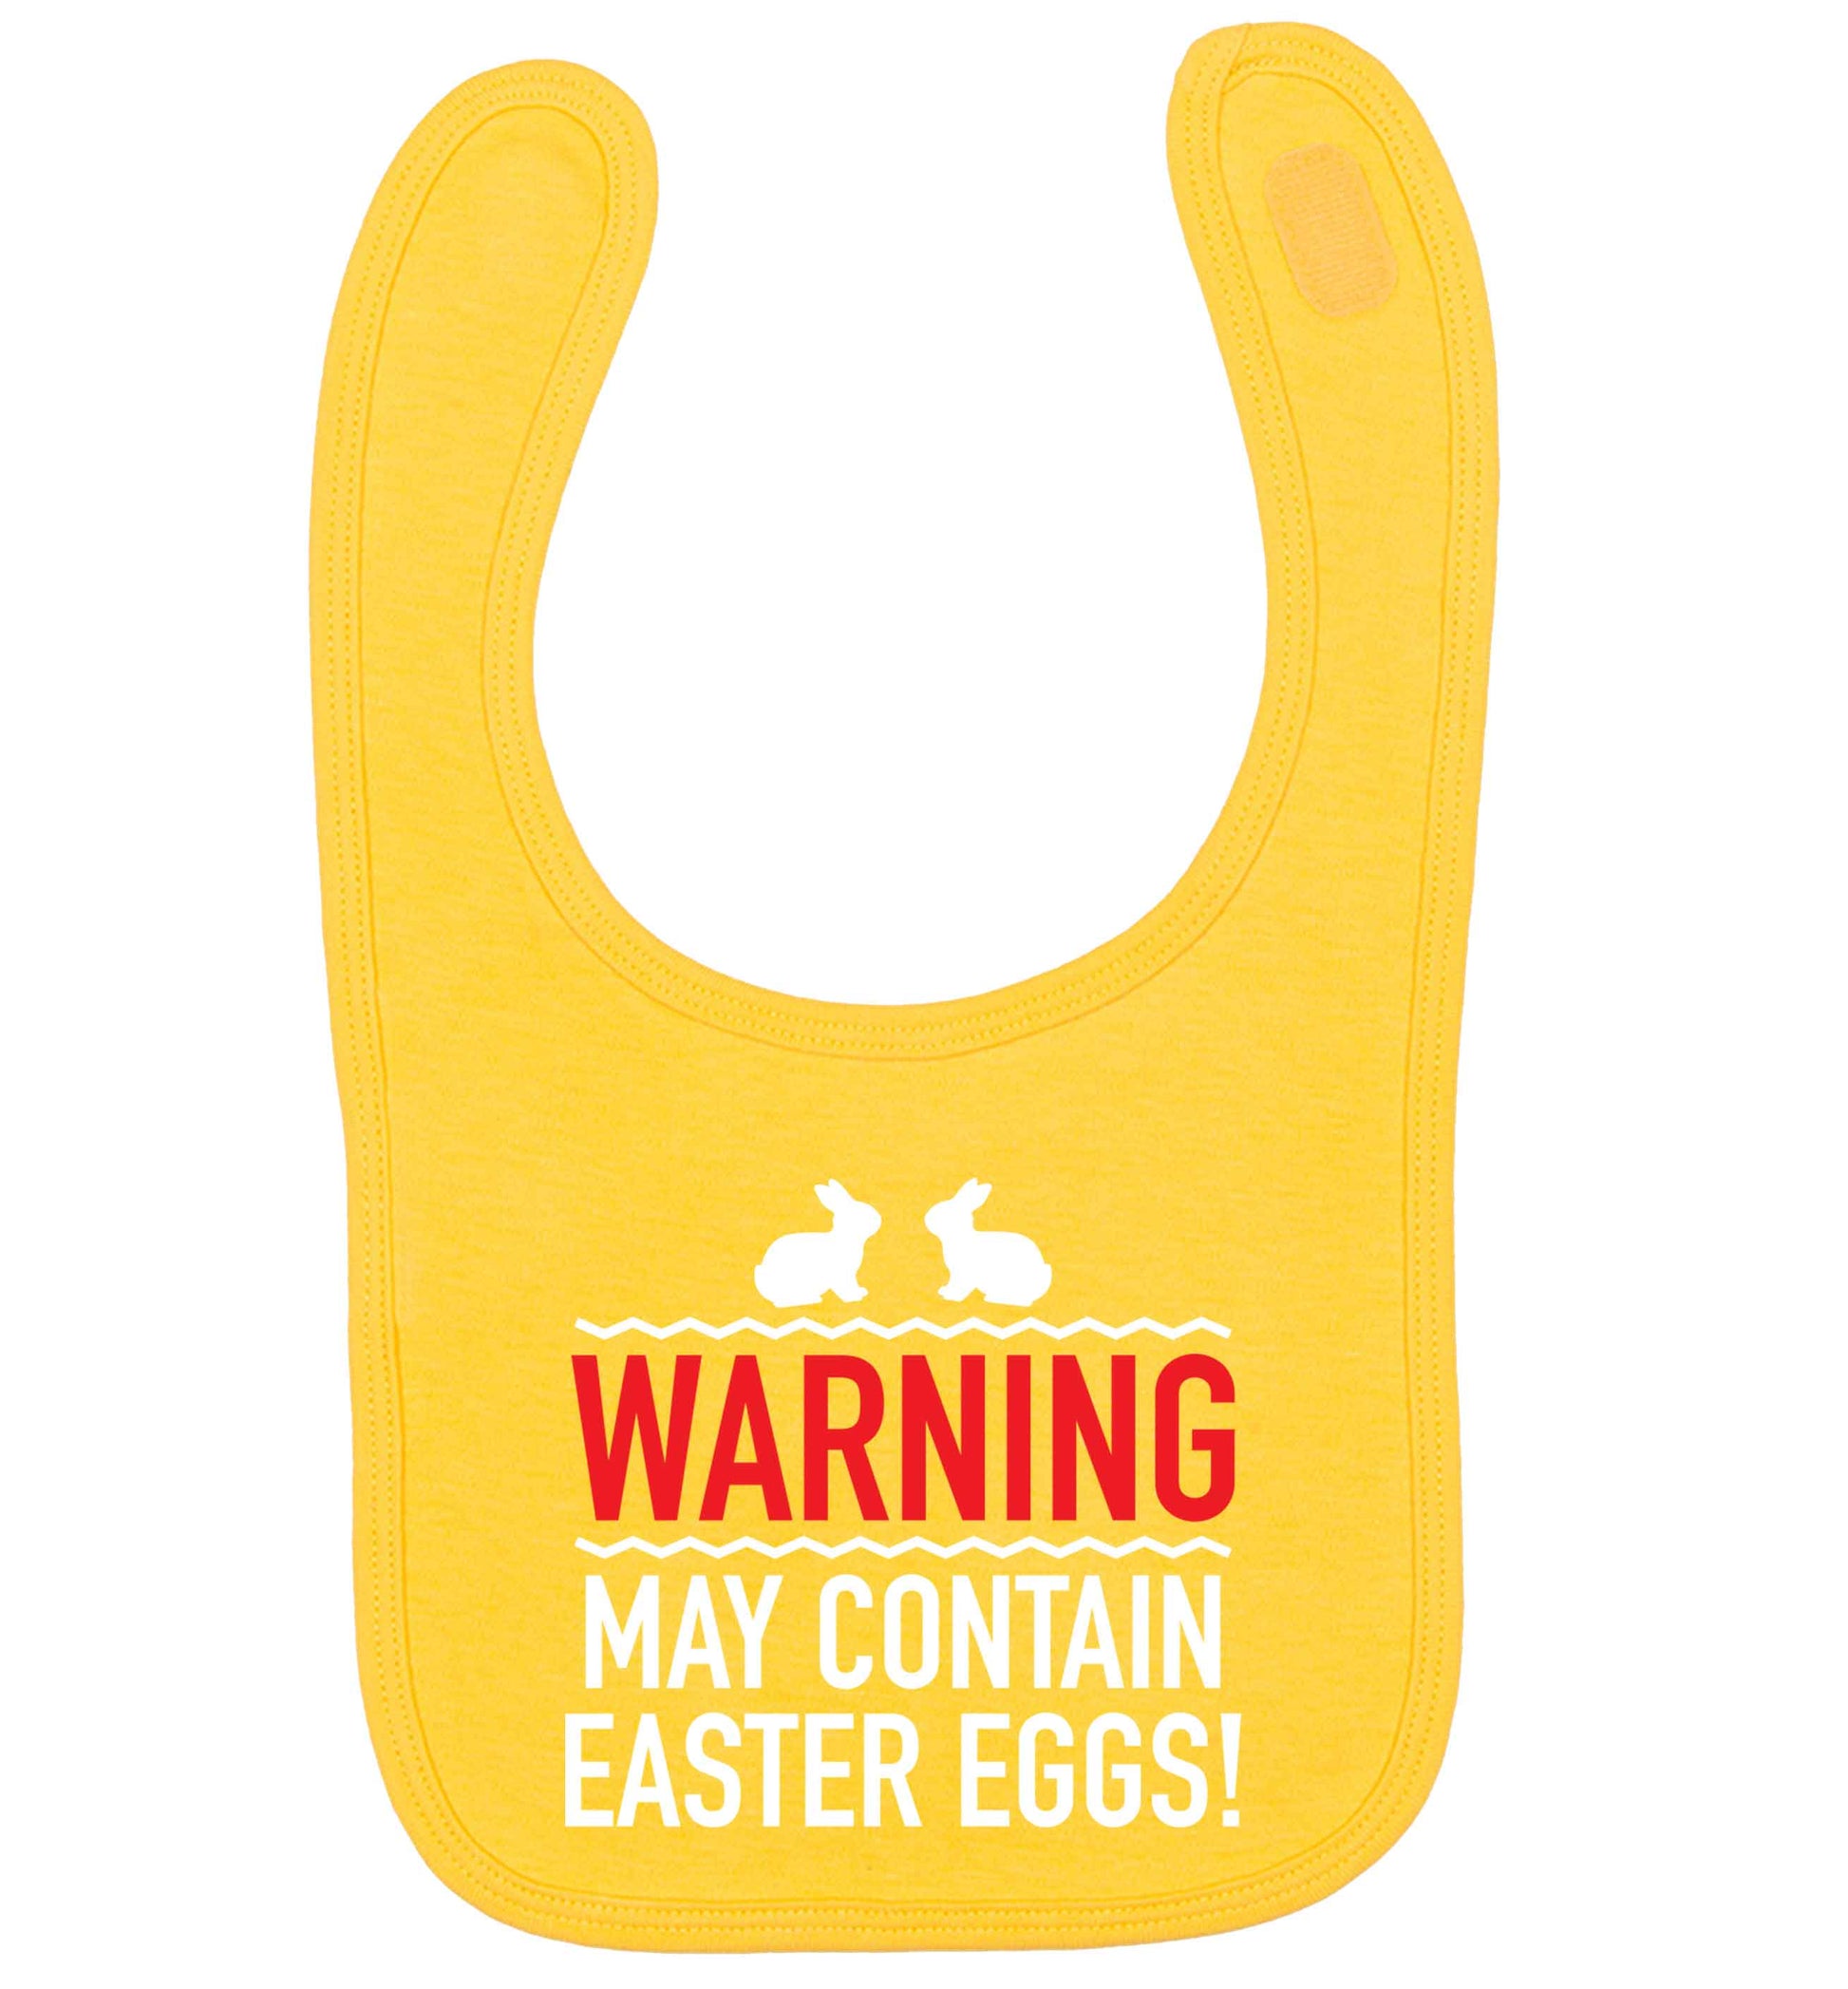 Warning may contain Easter eggs yellow baby bib